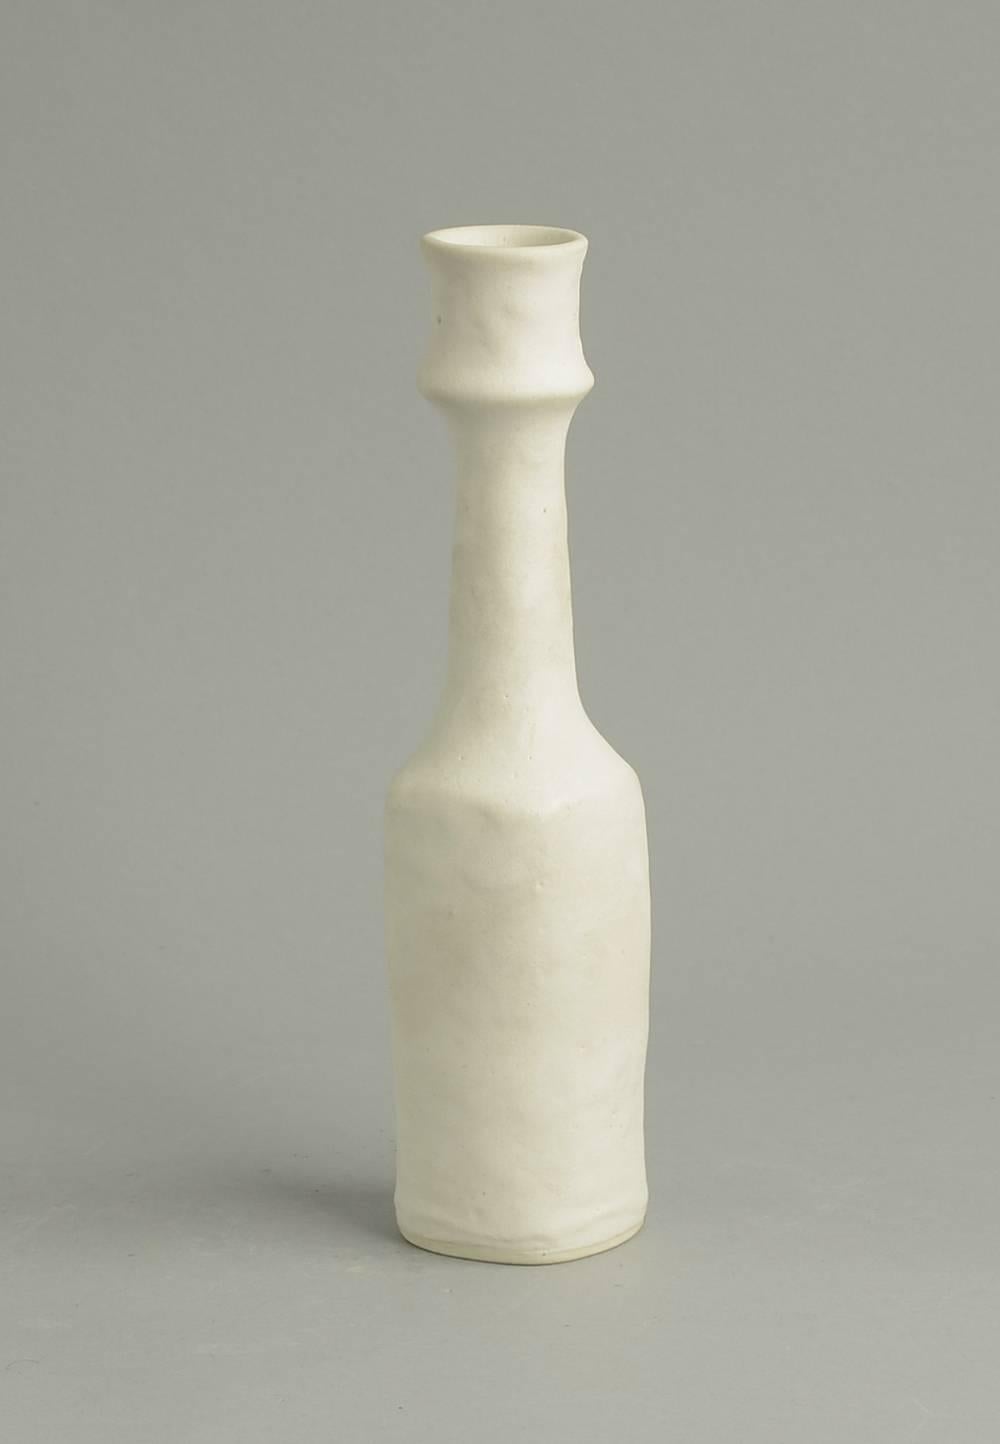 Unique stoneware vase with matte cream glaze, circa 1976.Lightly pitted matte white glaze over white stoneware body. Excellent, undamaged, unrestored conditon. 
Height 10